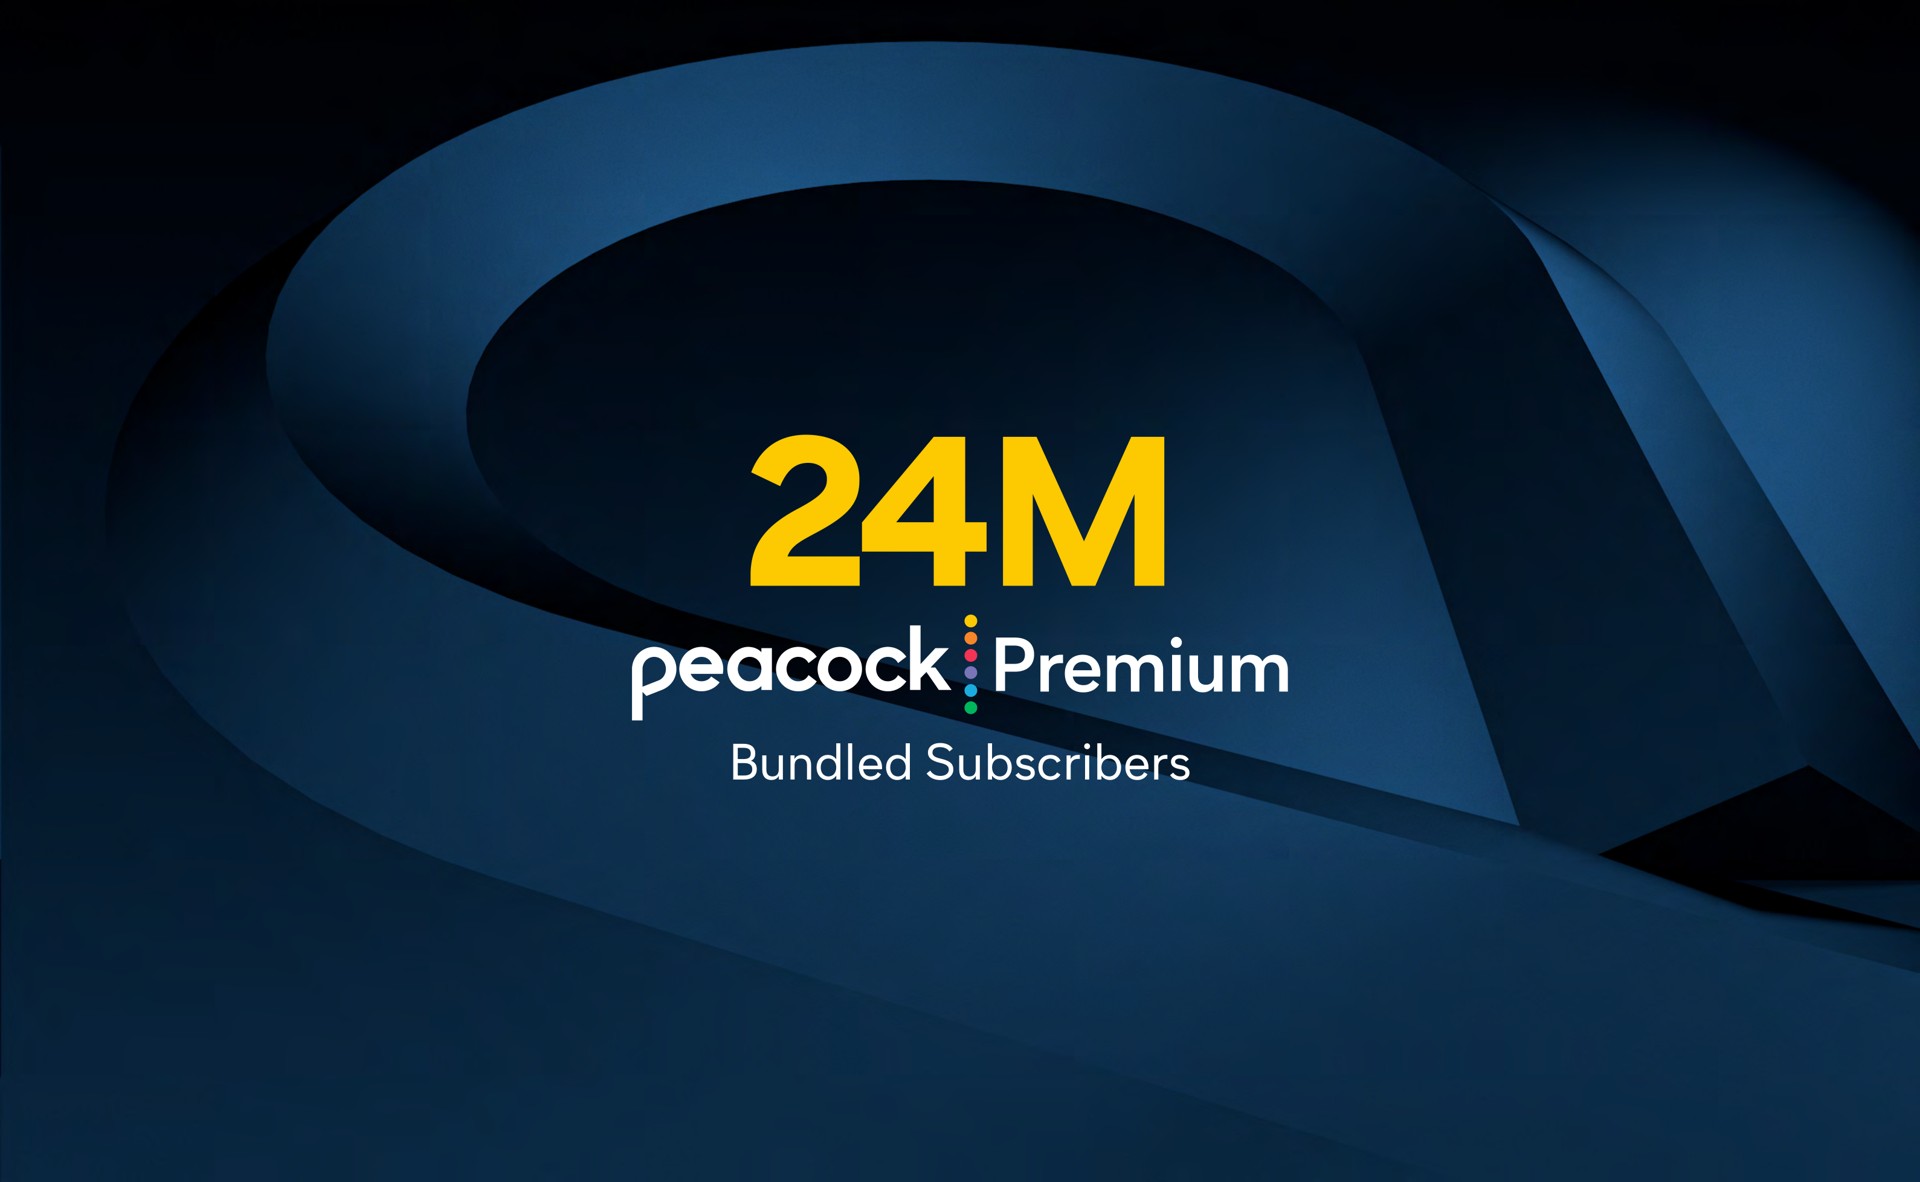 bundled subscribers poe an peacock premium | Comcast